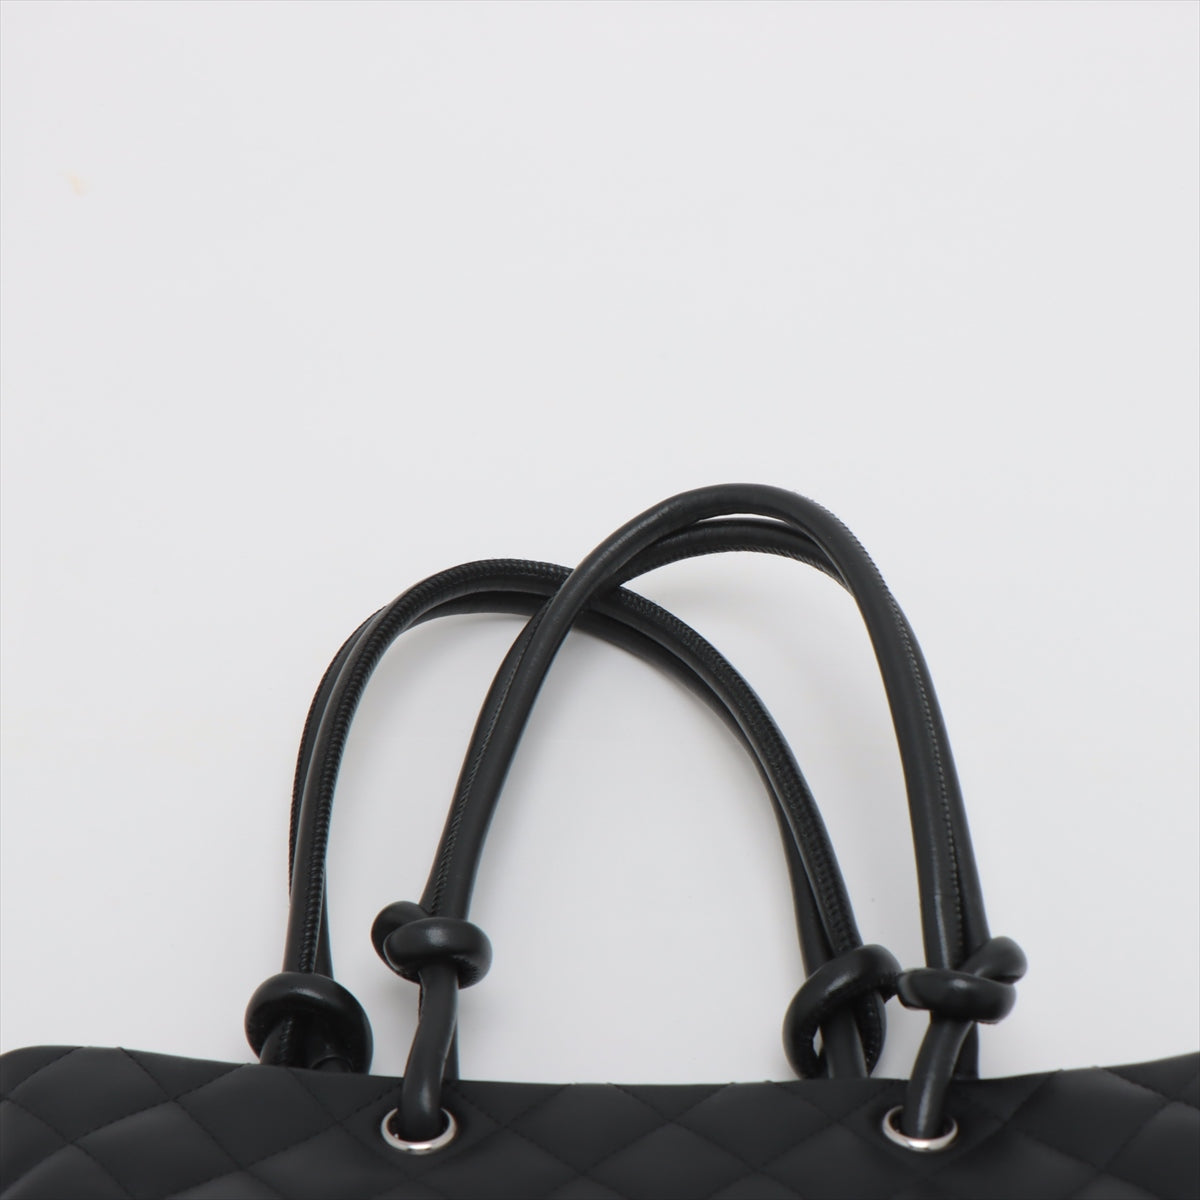 Chanel Combon Line Patent Leather   Handbag Black Silver G